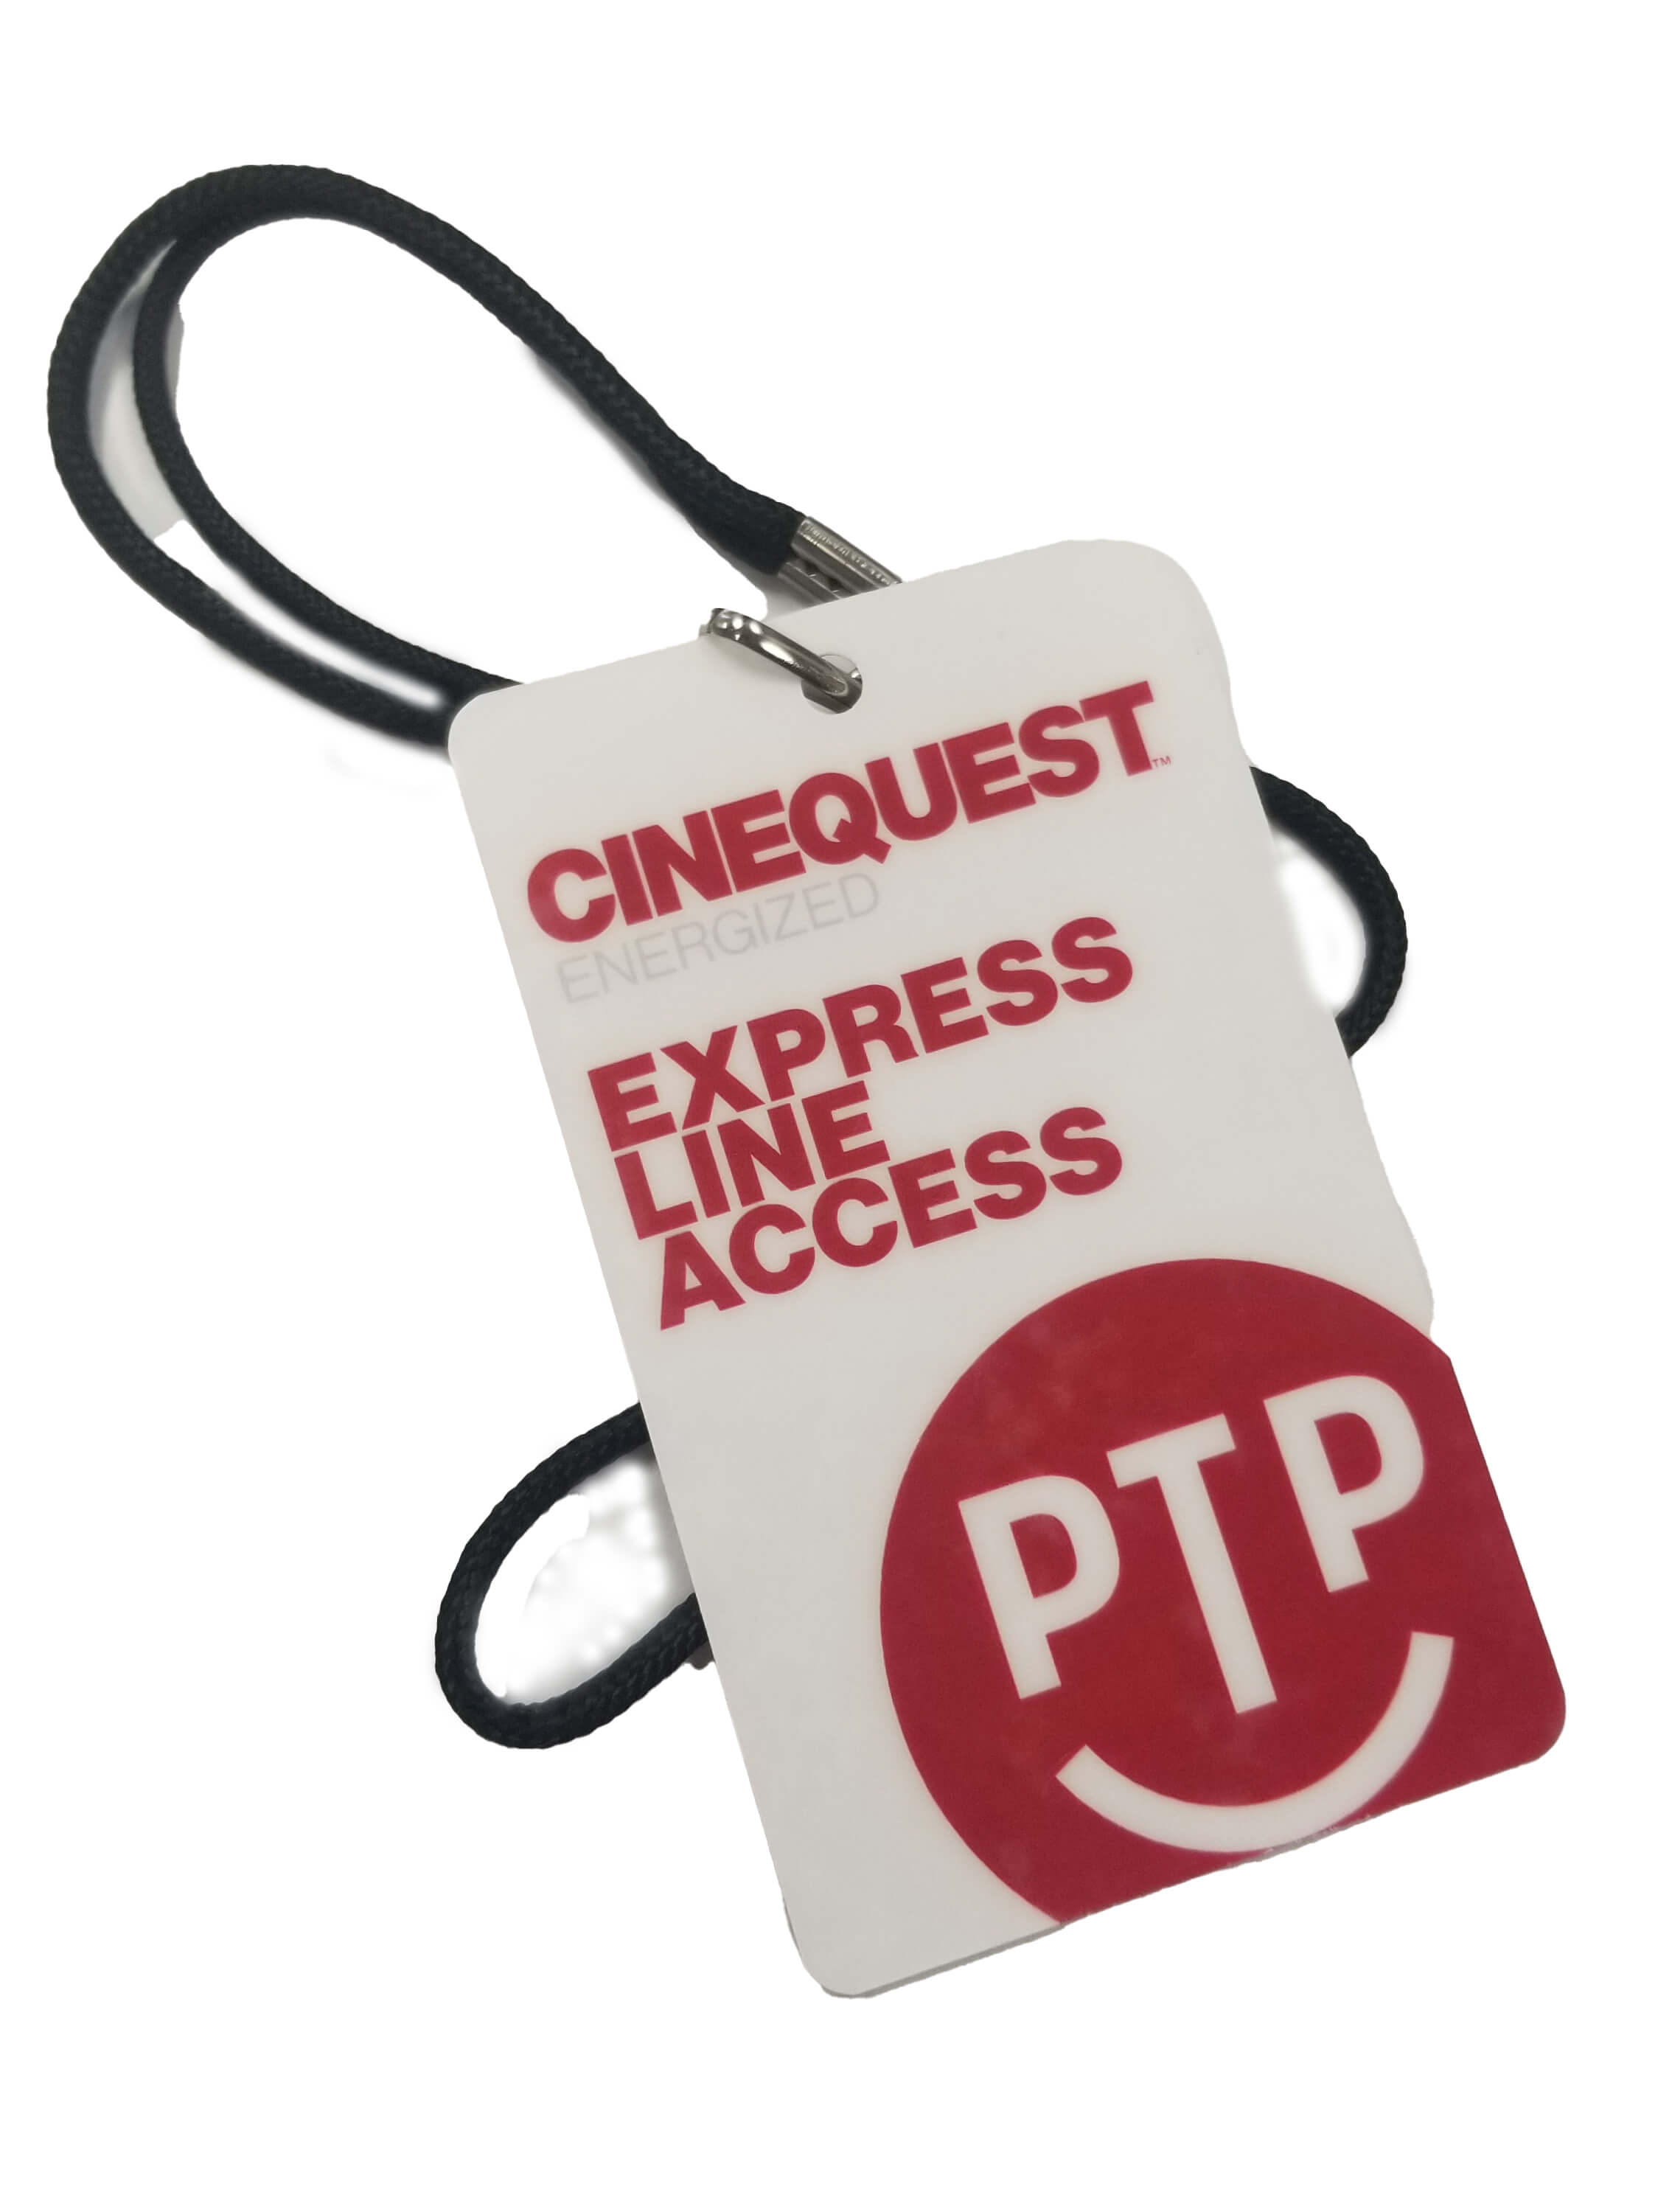 Cinequest Express Line Access